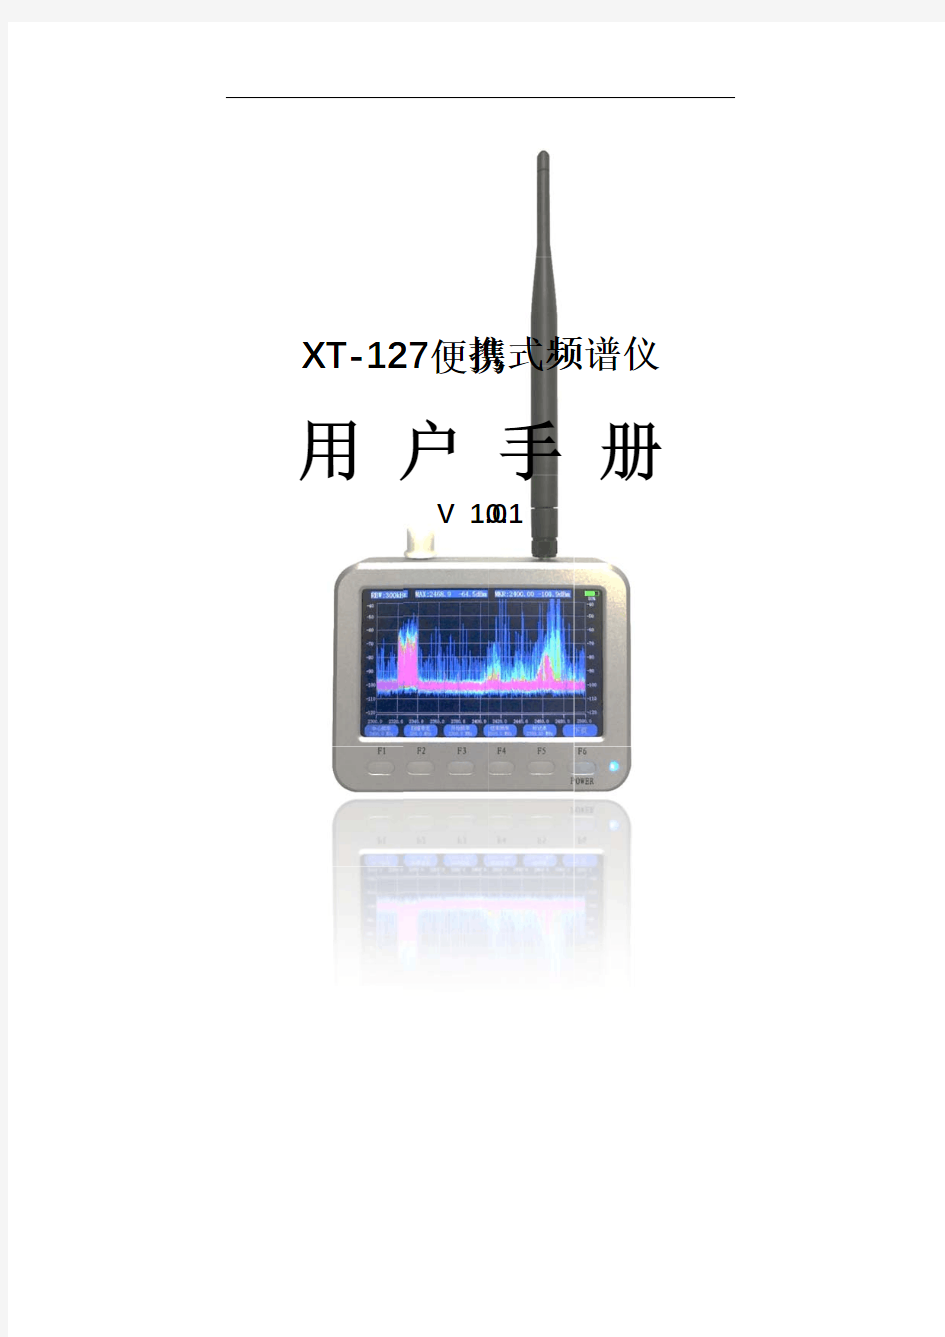 XT-127便携式频谱仪说明书(10M~2.7G)V1.0.1